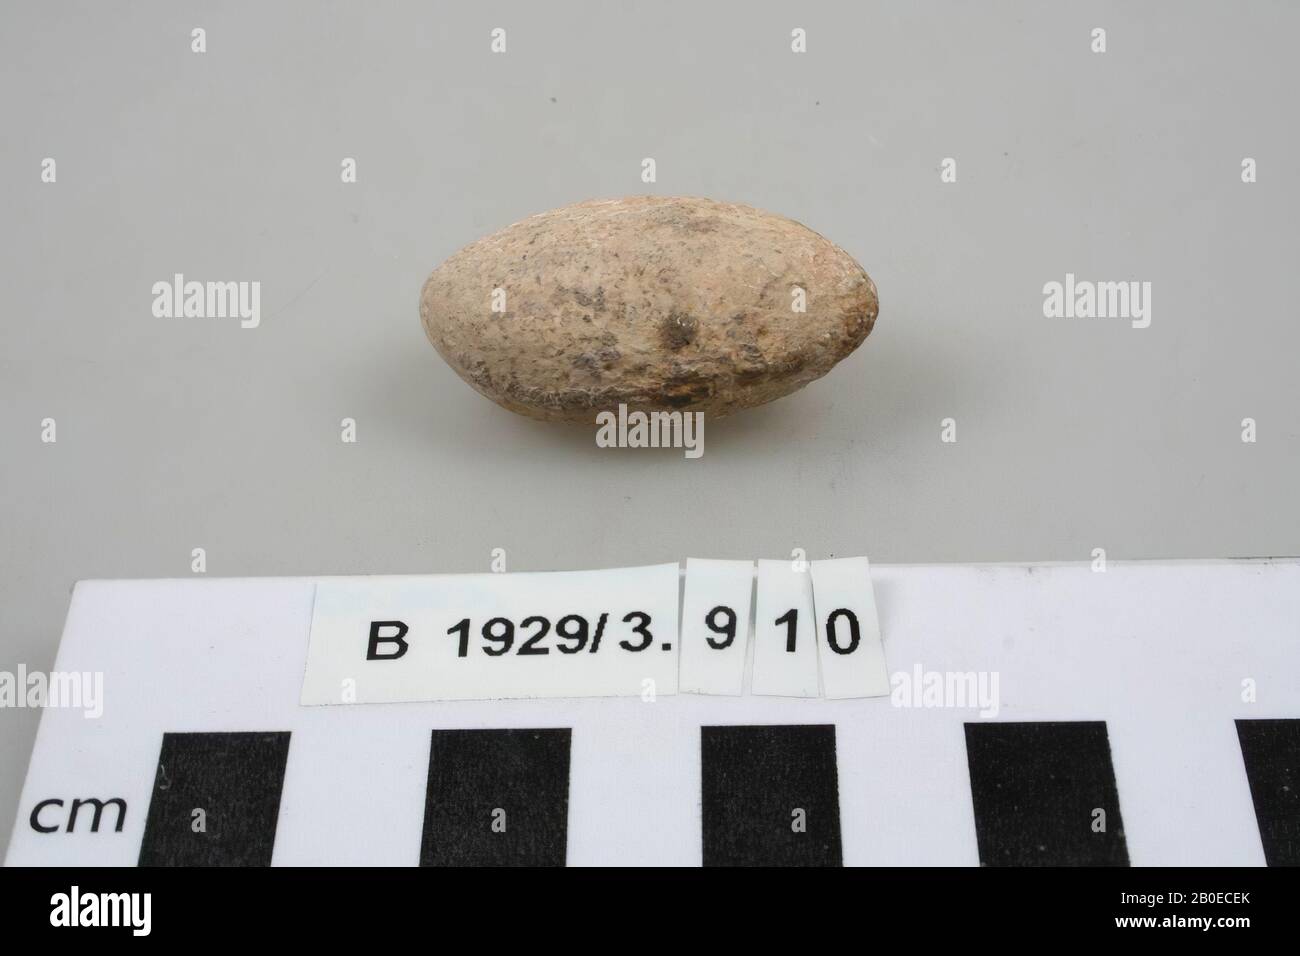 Ancient Near East, stone, stone, l, 4.3 cm, Location, Israel Stock Photo